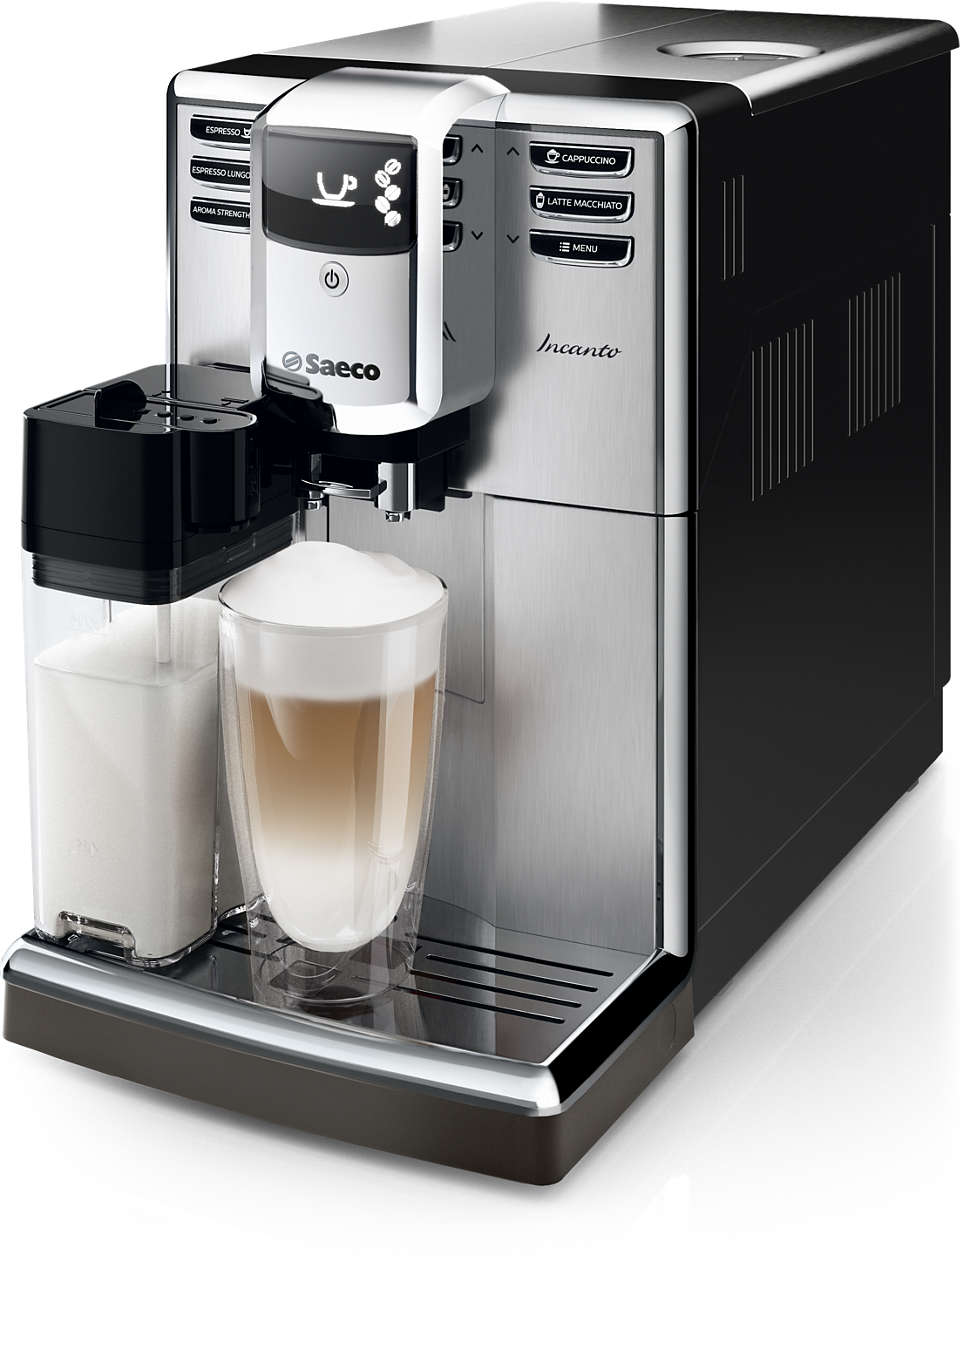 Wet cleanse Inward Incanto Super-automatic espresso machine HD8917/48 | Saeco